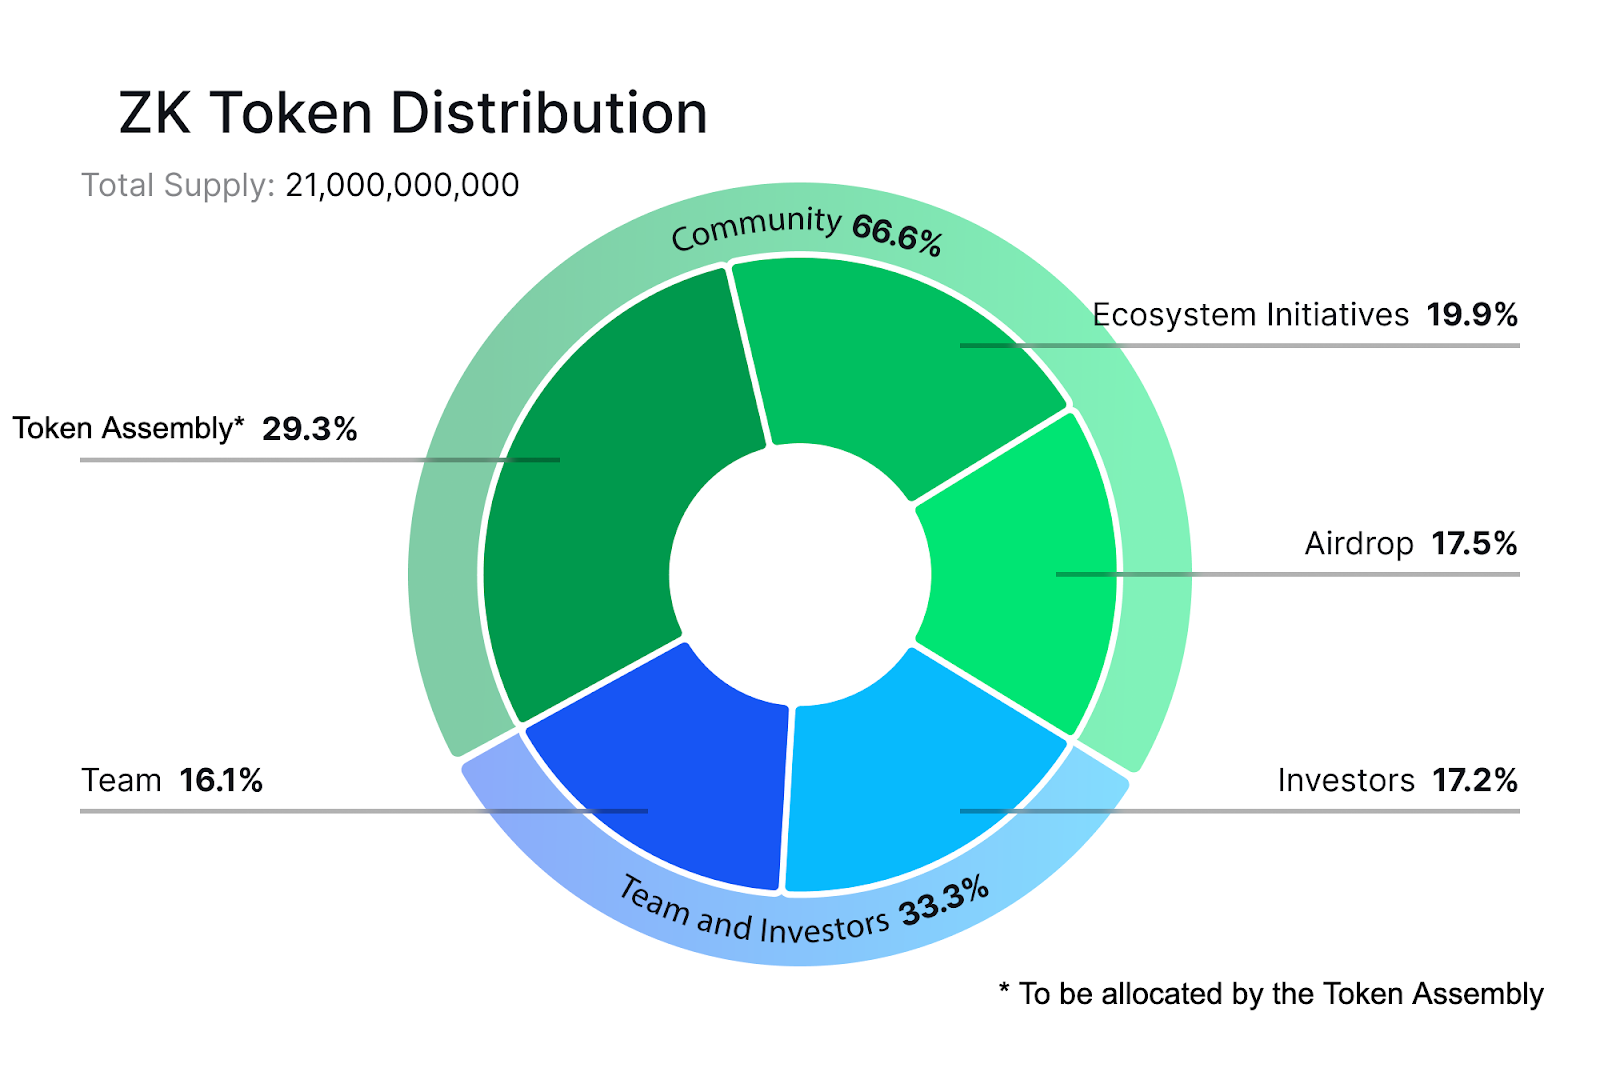 ZK token distribution